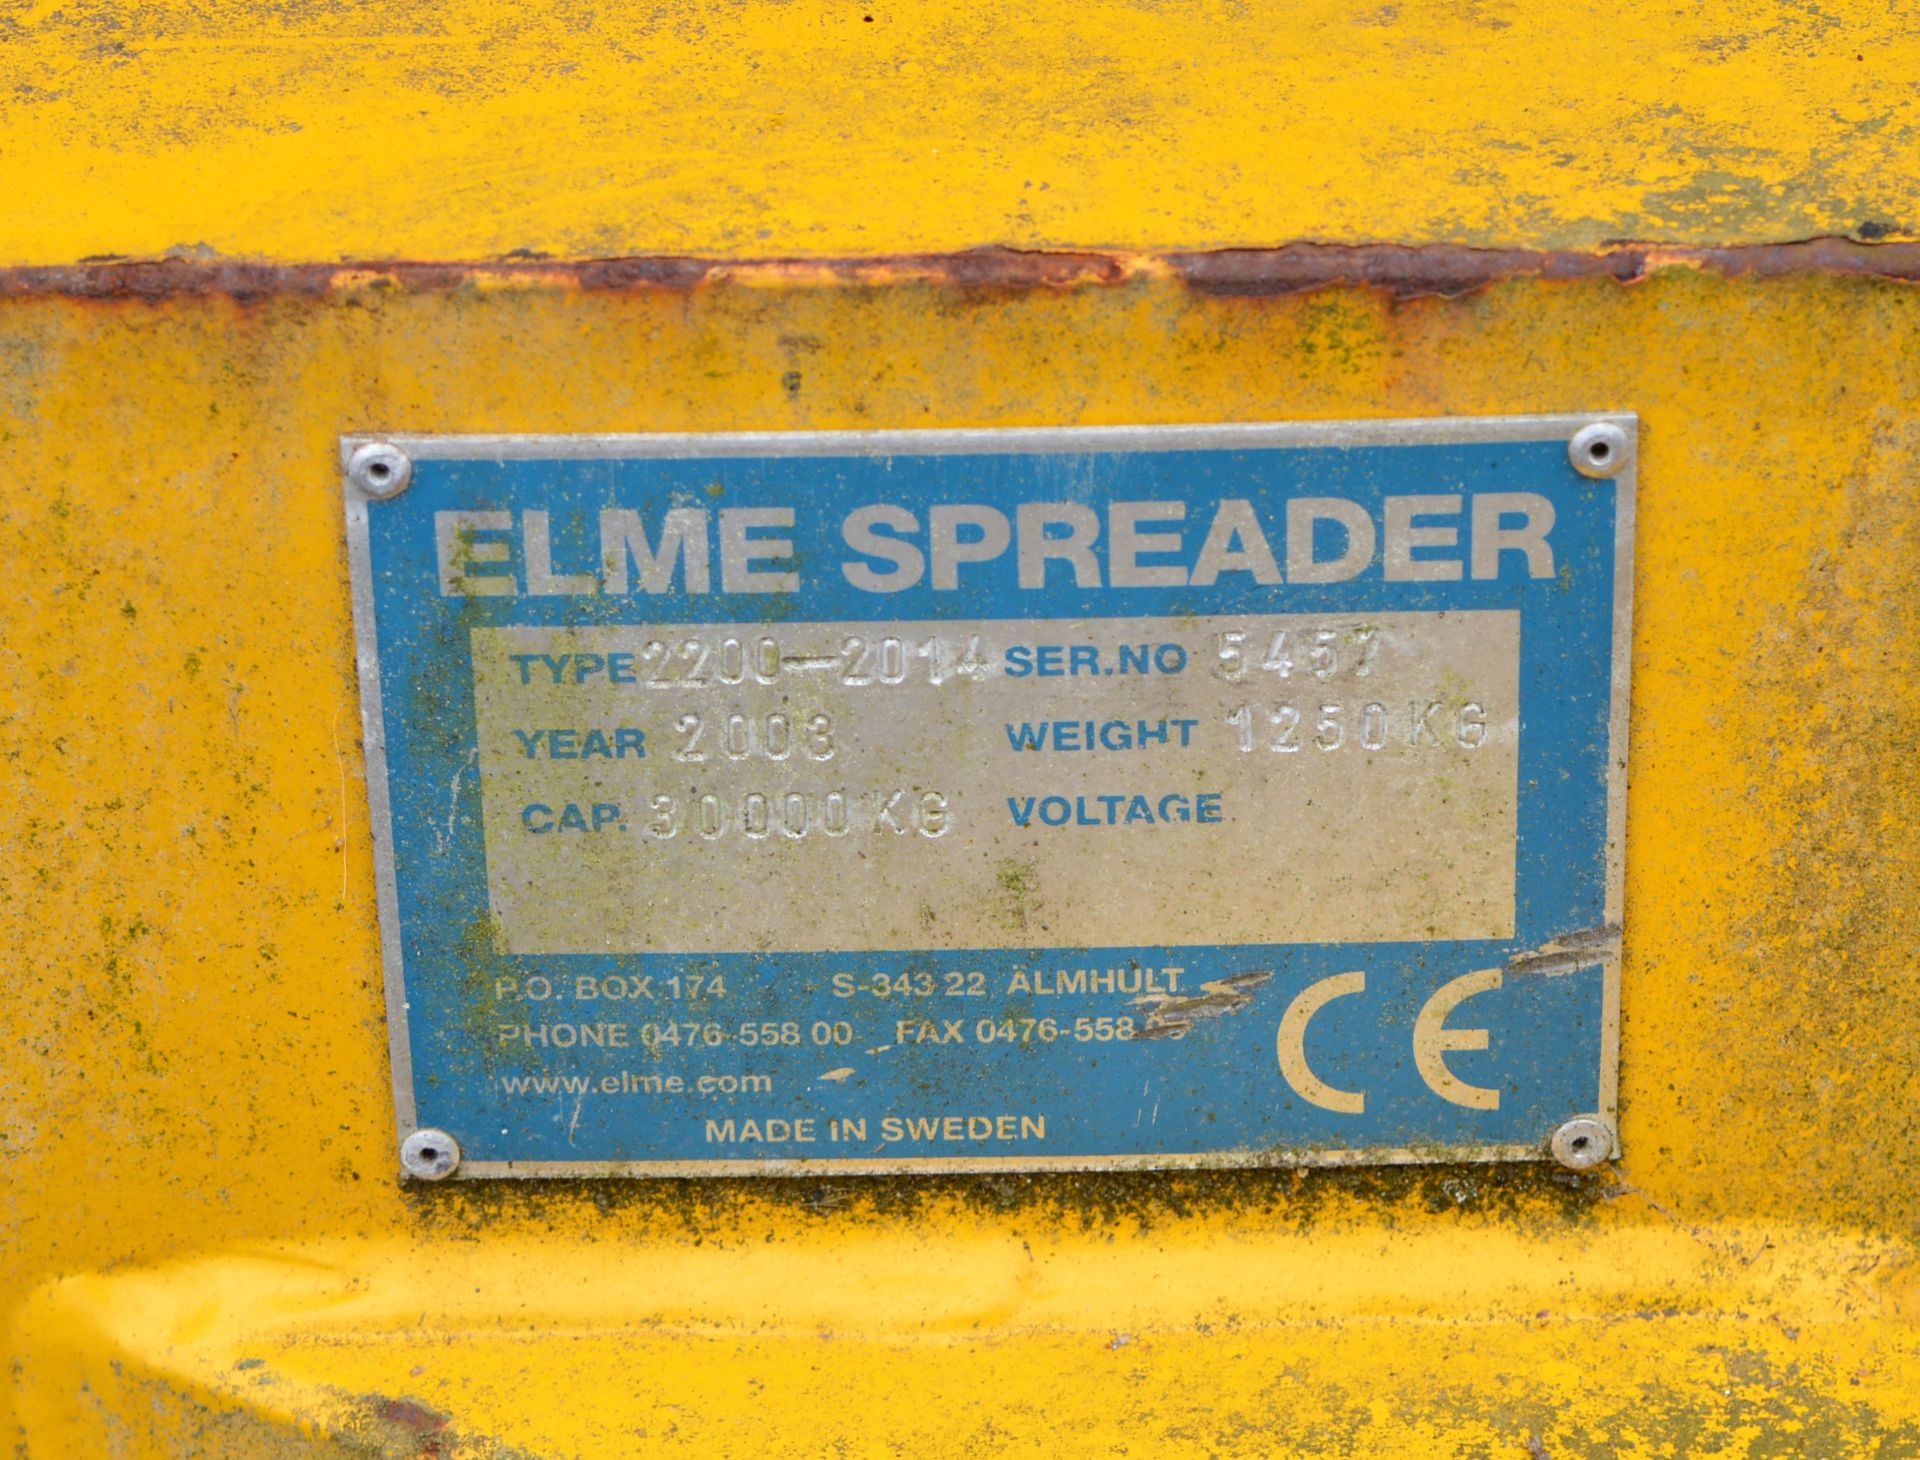 Elme Spreader - Weight 1250kg, Capacity 30,000kg - 6.05m x 2.45m. - Image 4 of 6